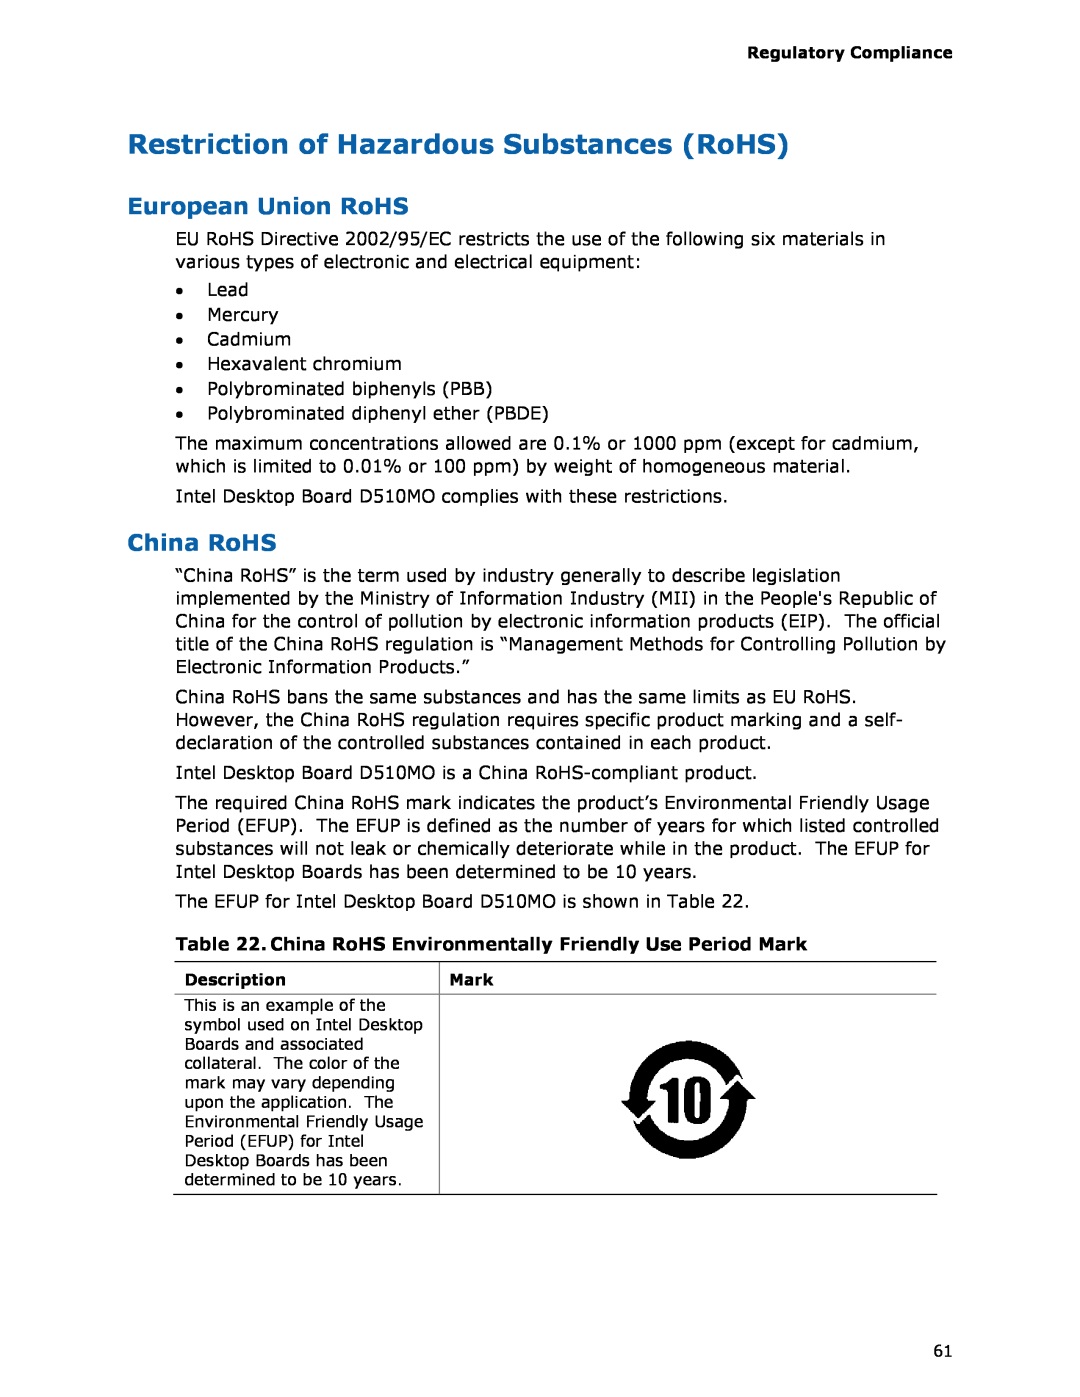 Intel D510MO manual Restriction of Hazardous Substances RoHS, European Union RoHS, China RoHS 